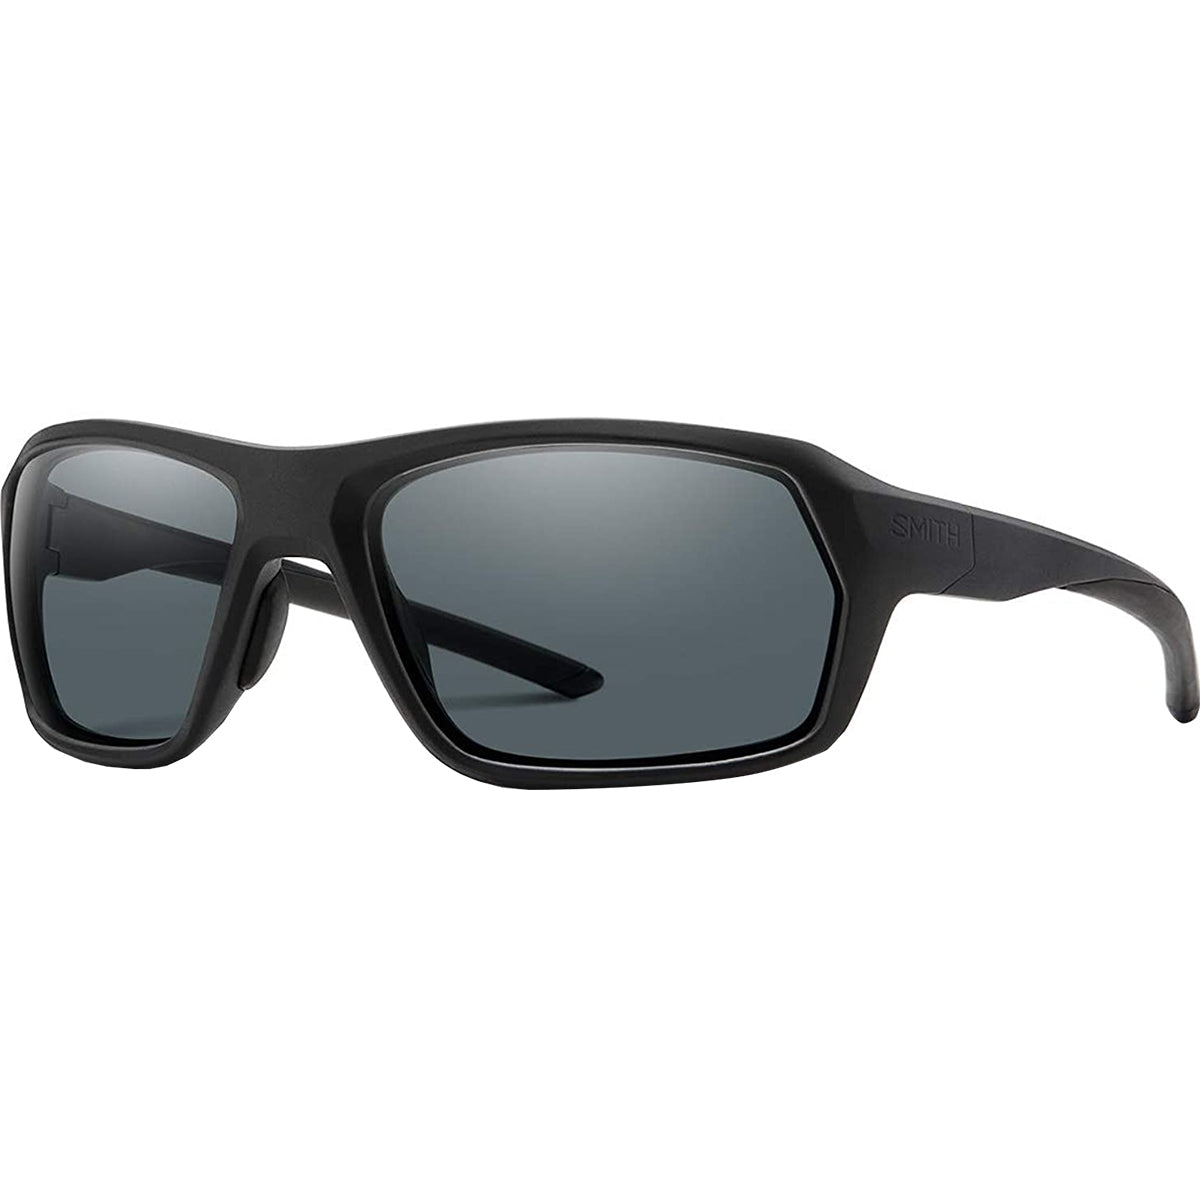 Smith Optics Rebound Adult Lifestyle Sunglasses-20124480760KI